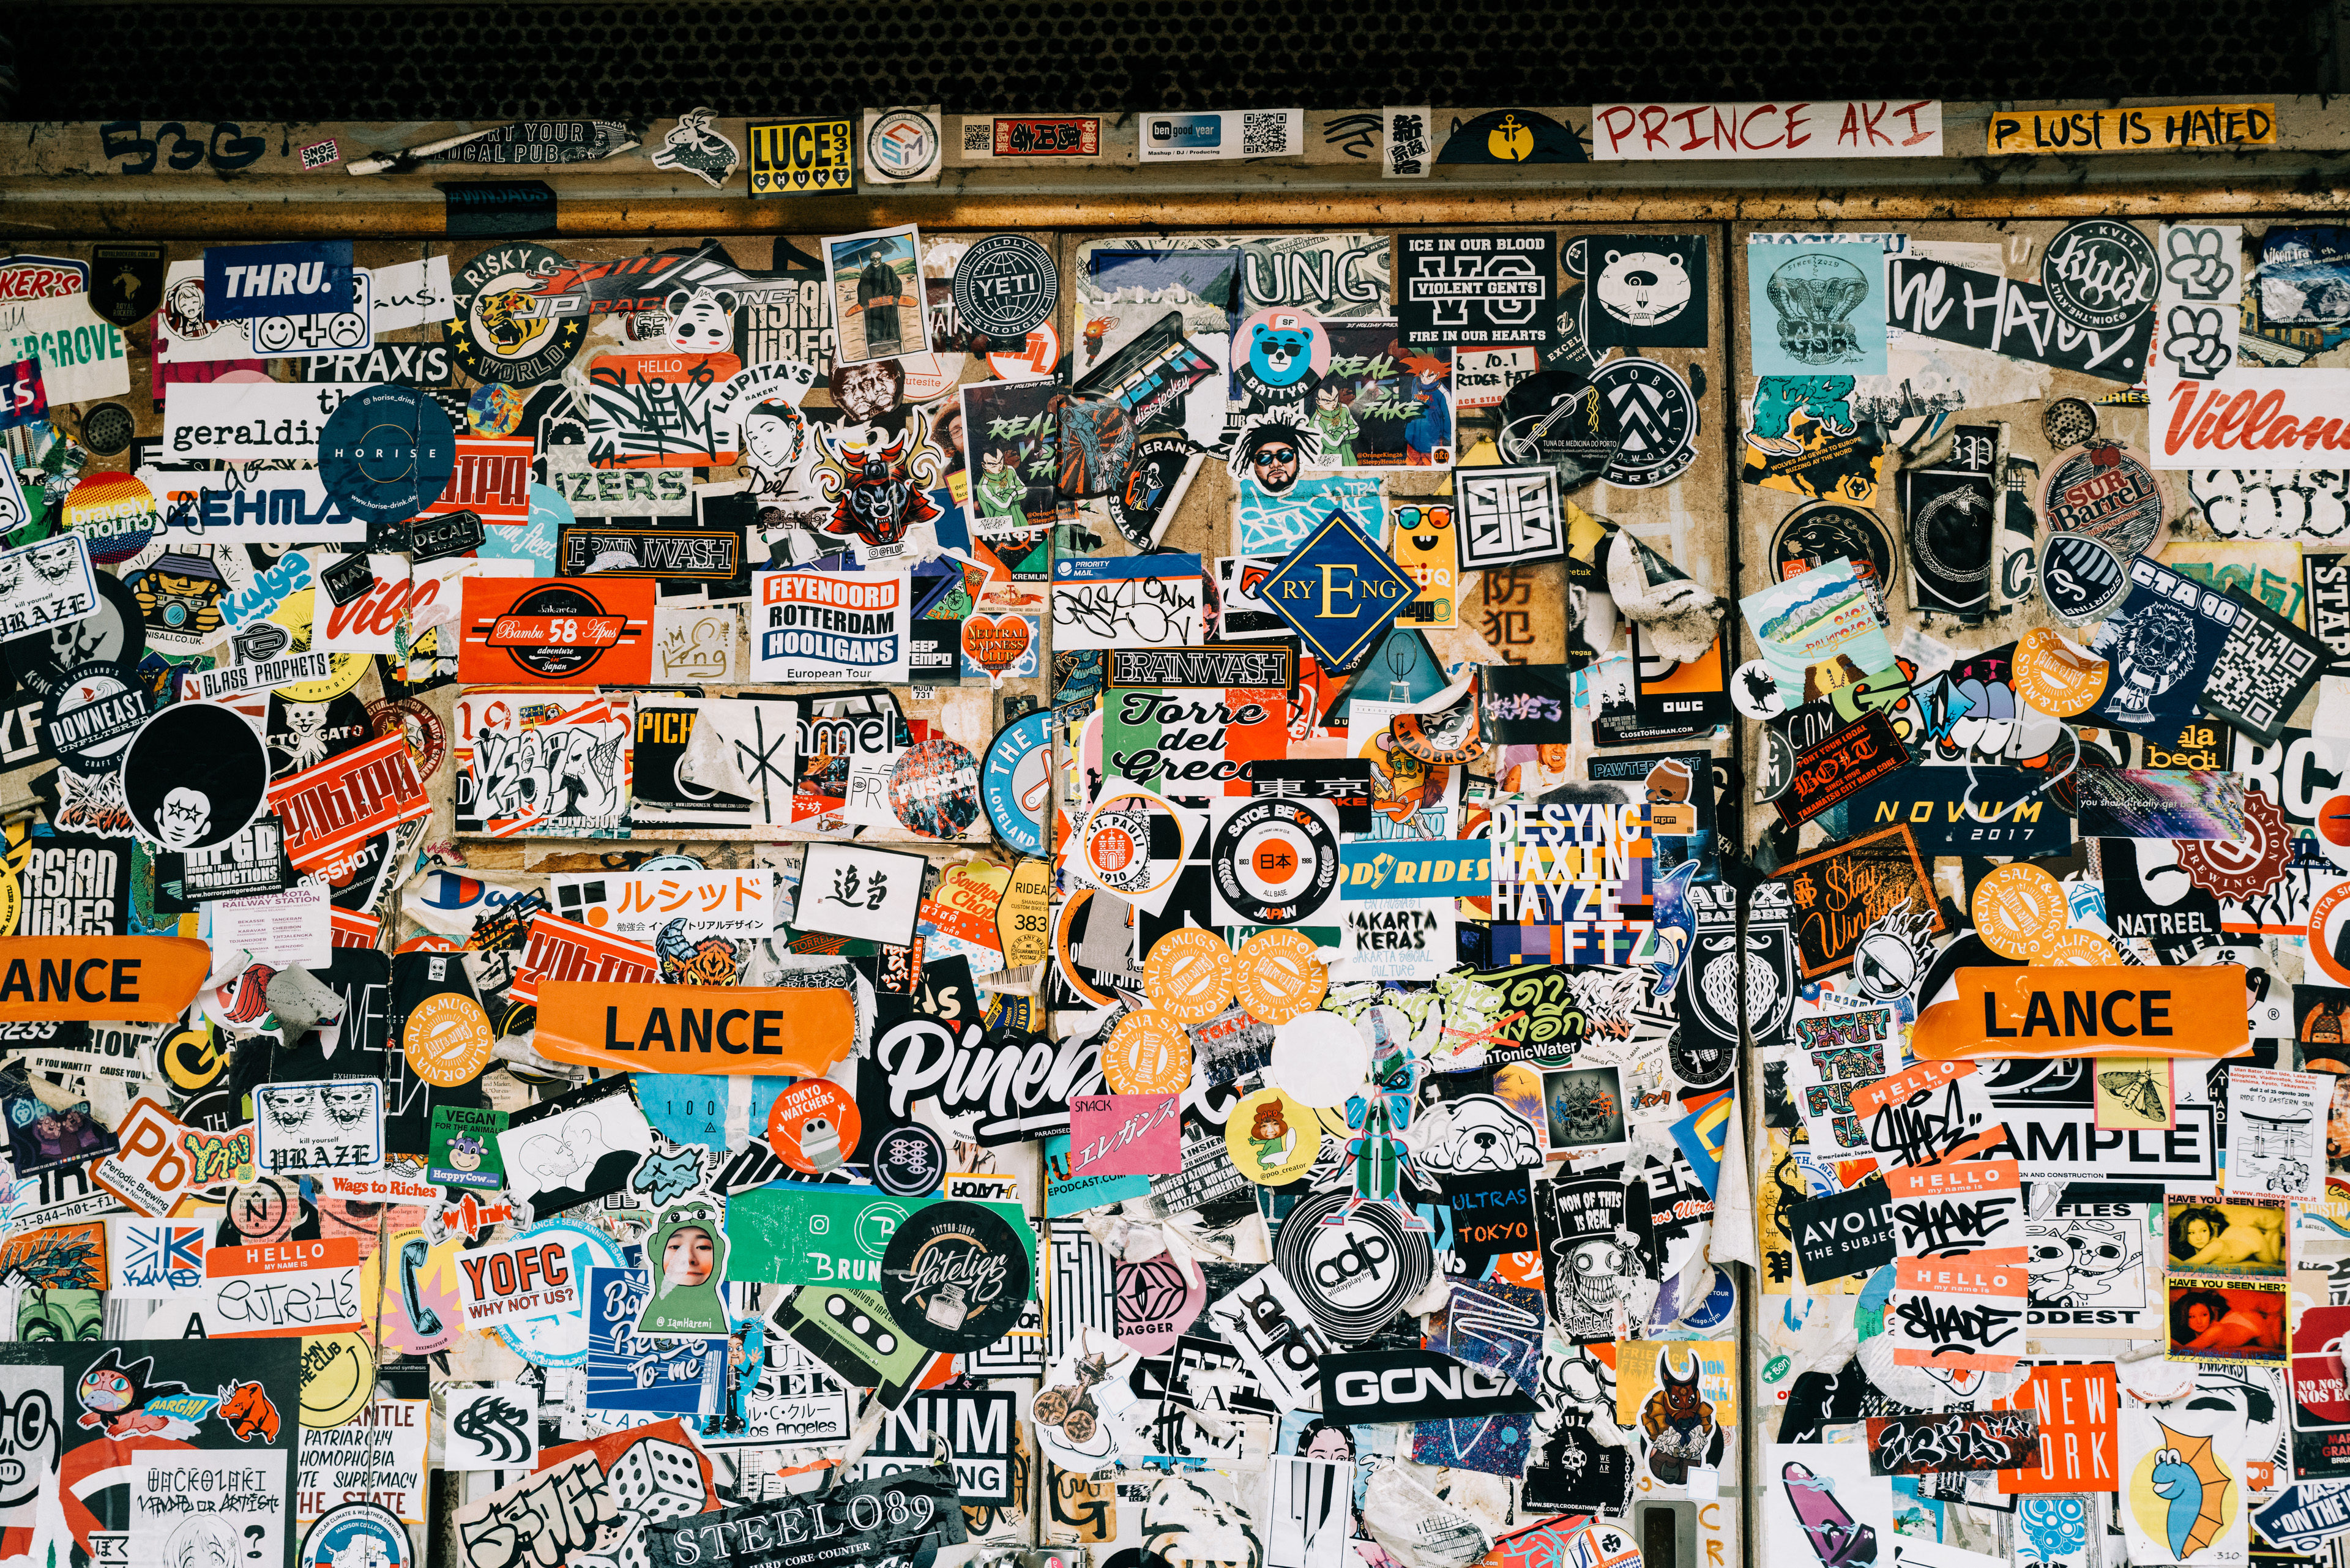 A wall of stickers at Golden Gai in Shinjuku.